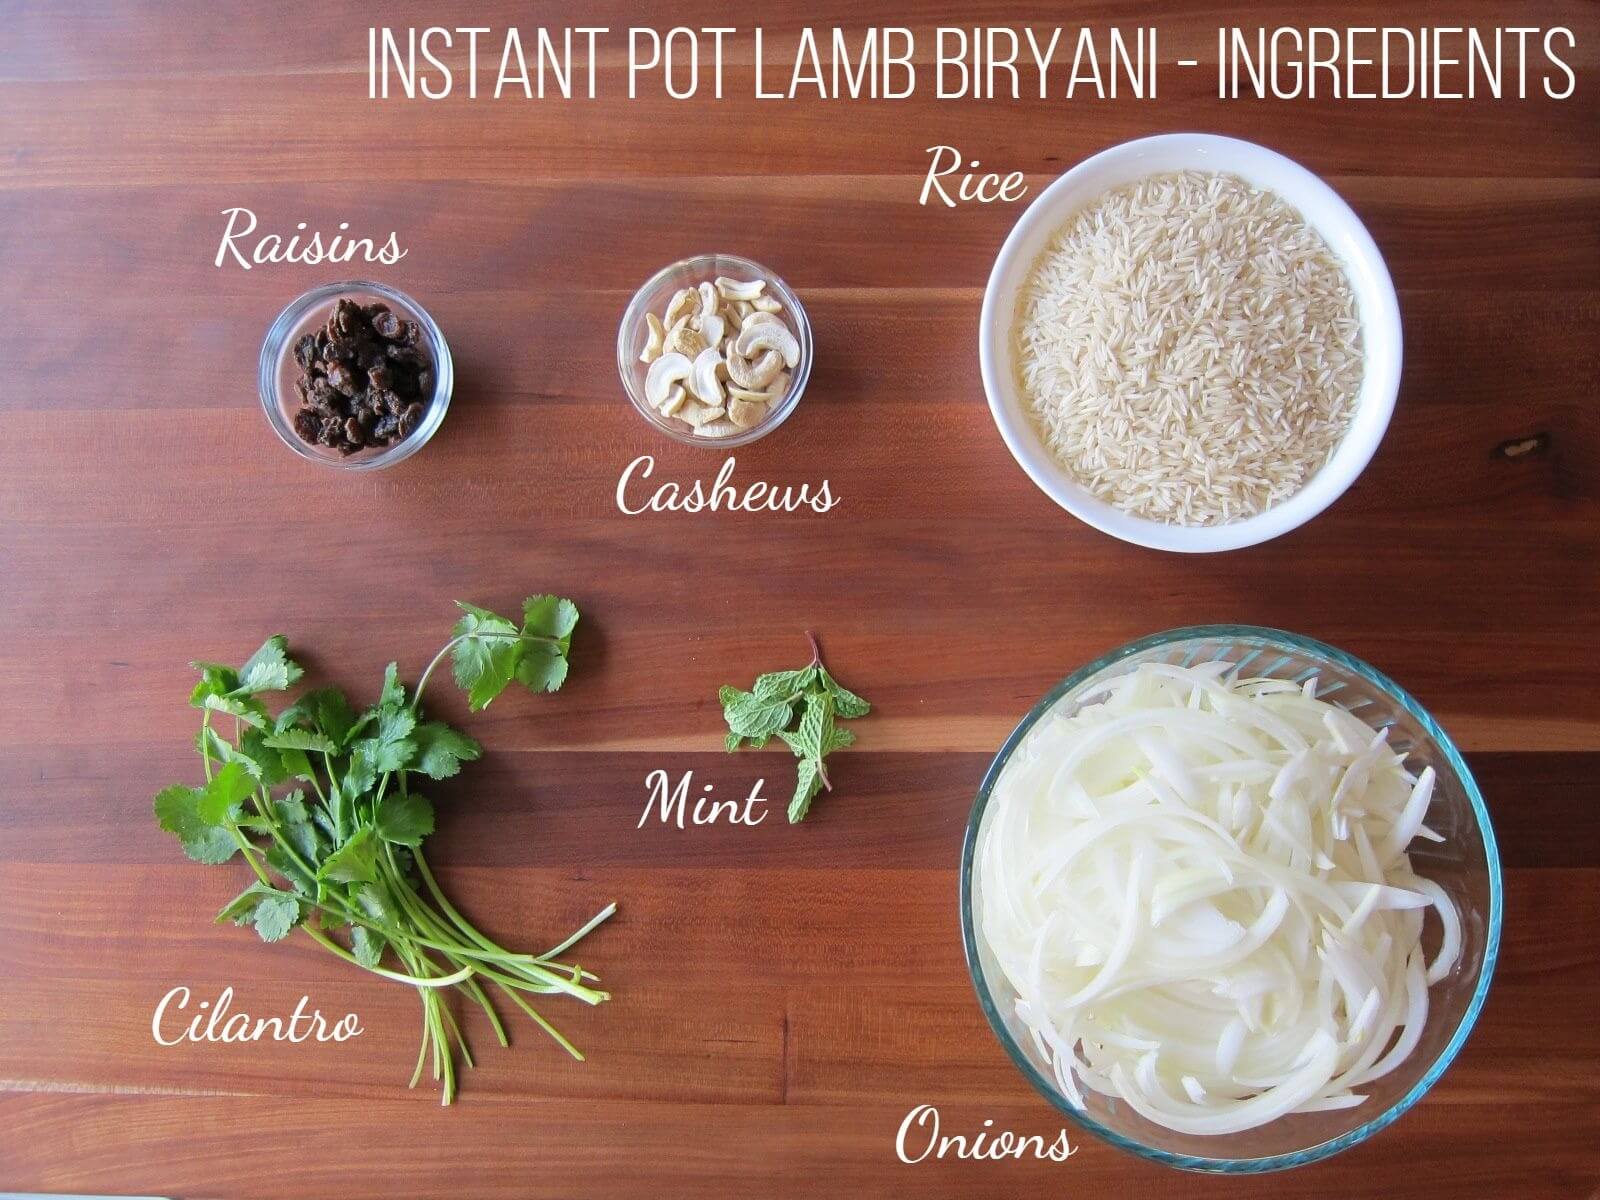 Instant Pot Lamb Biryani Ingredients.